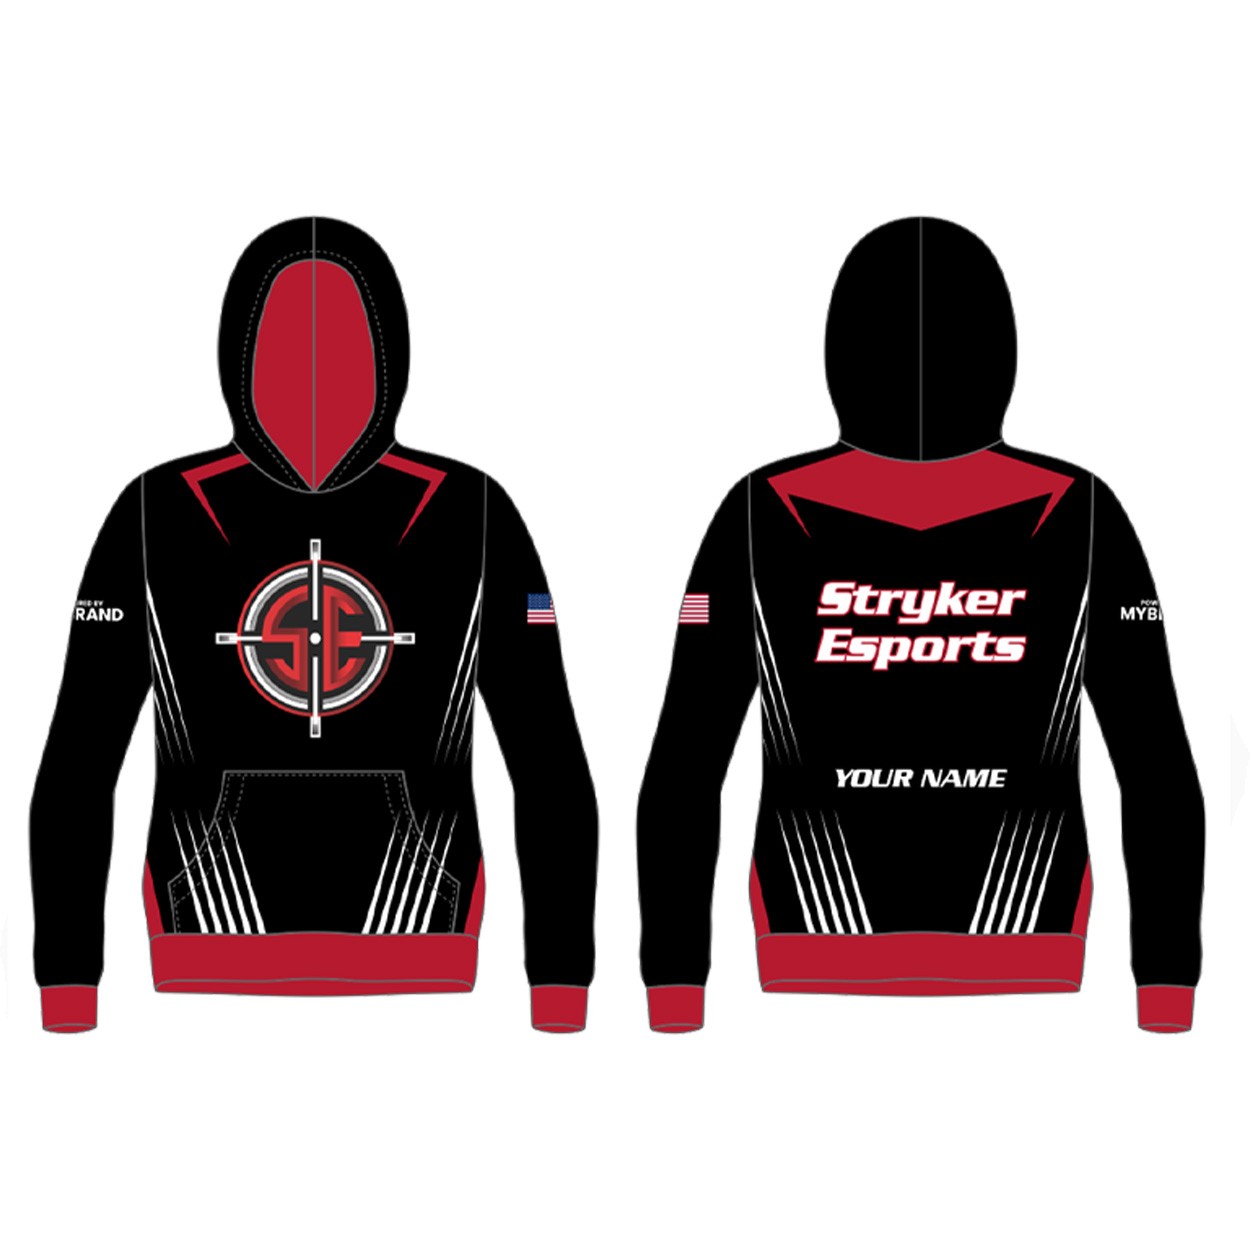 Stryker Esports Classic Premium Sublimated Sweatshirt